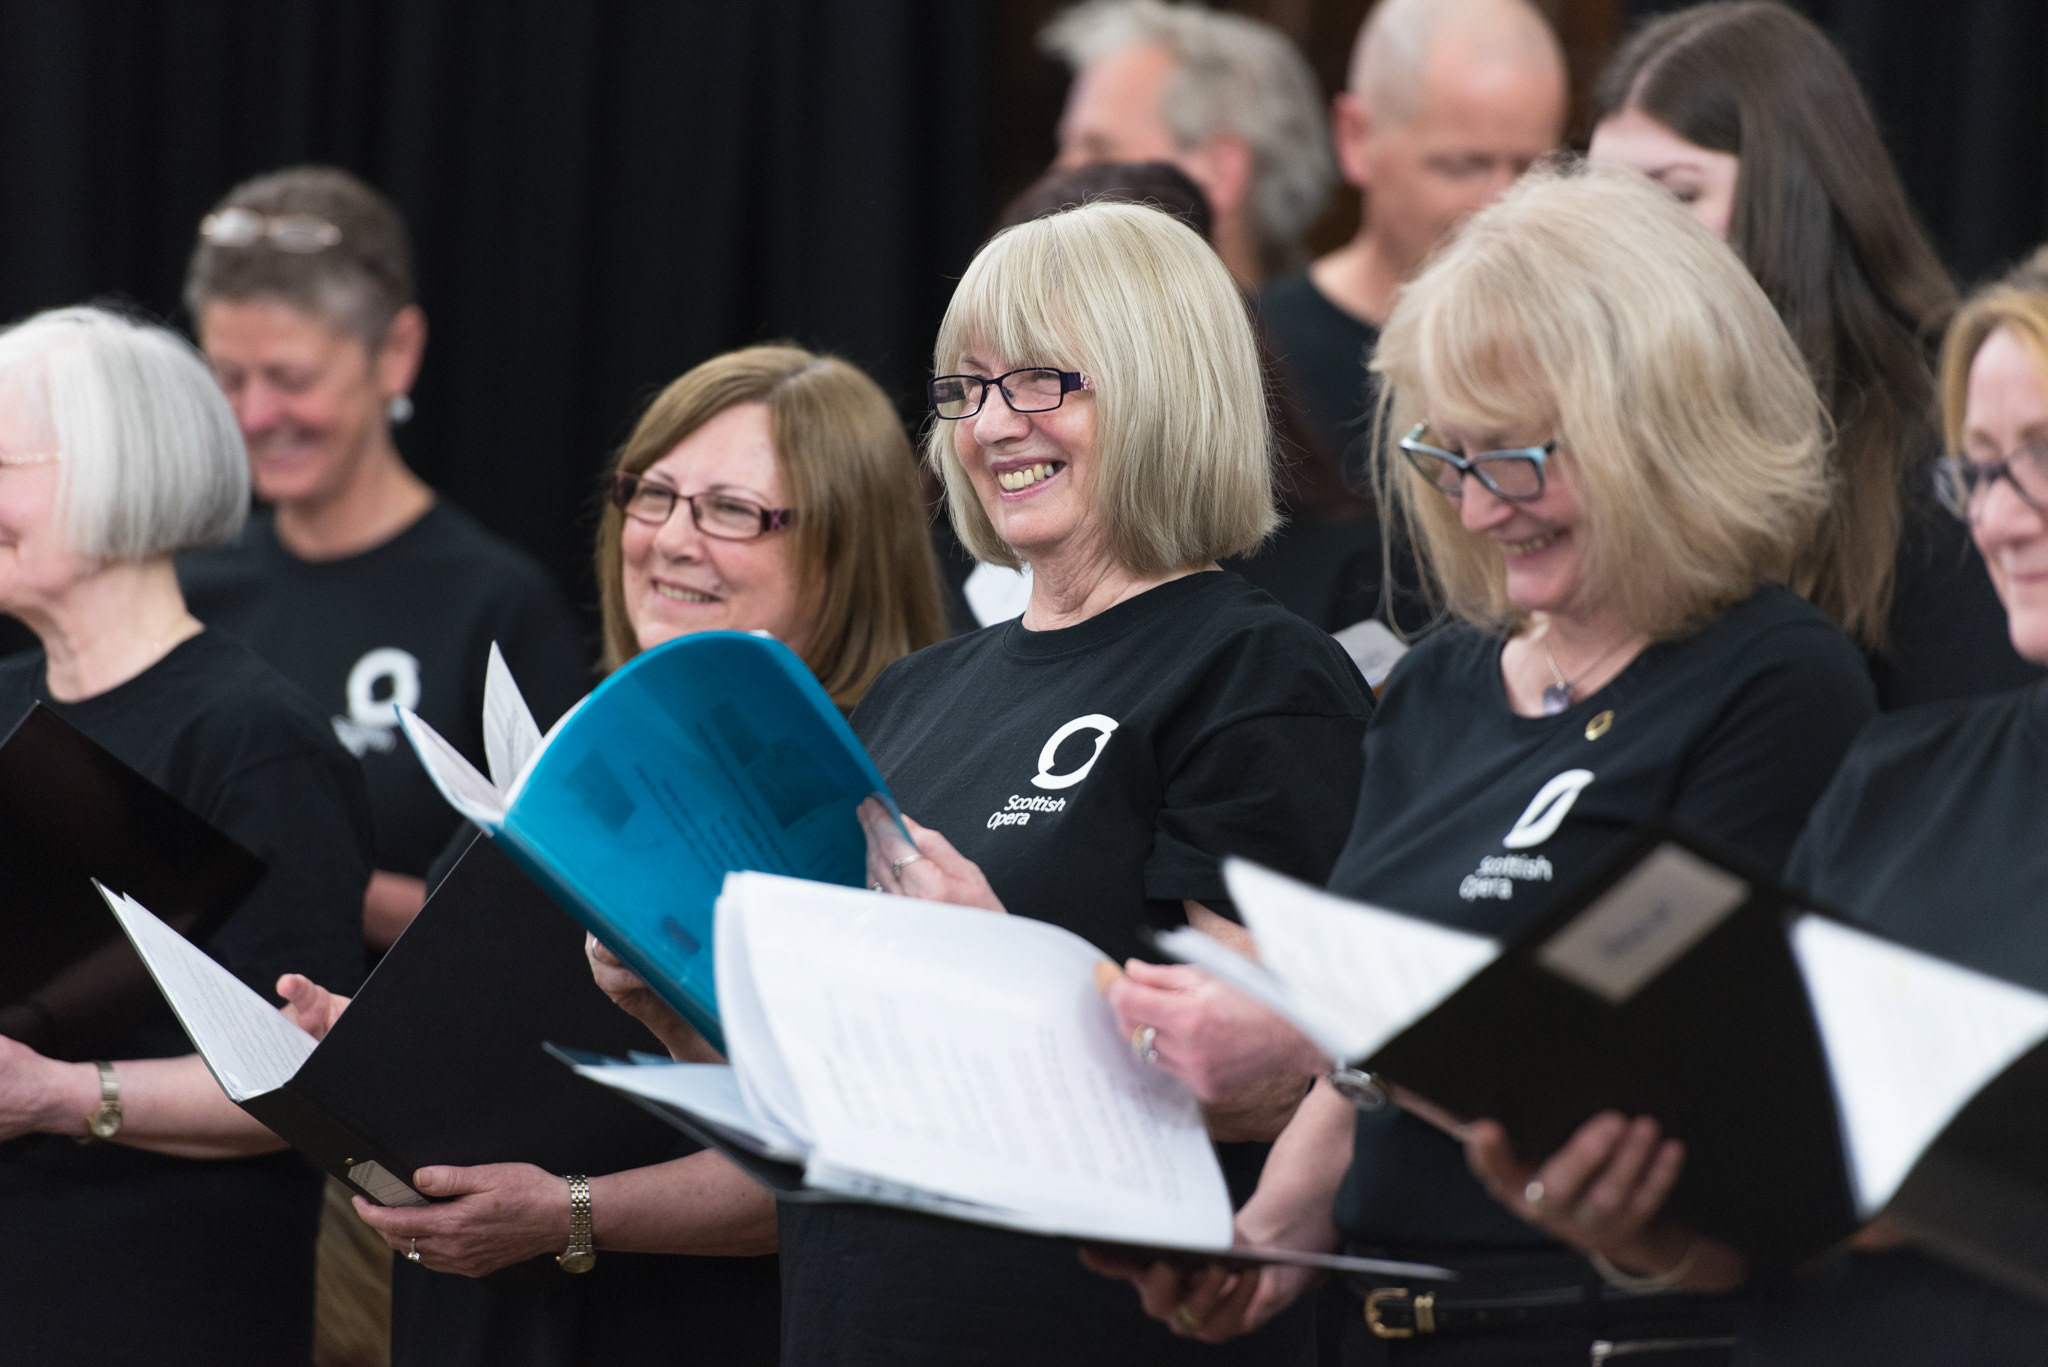 scottish-opera-community-choir-performers-glasgow.jpg